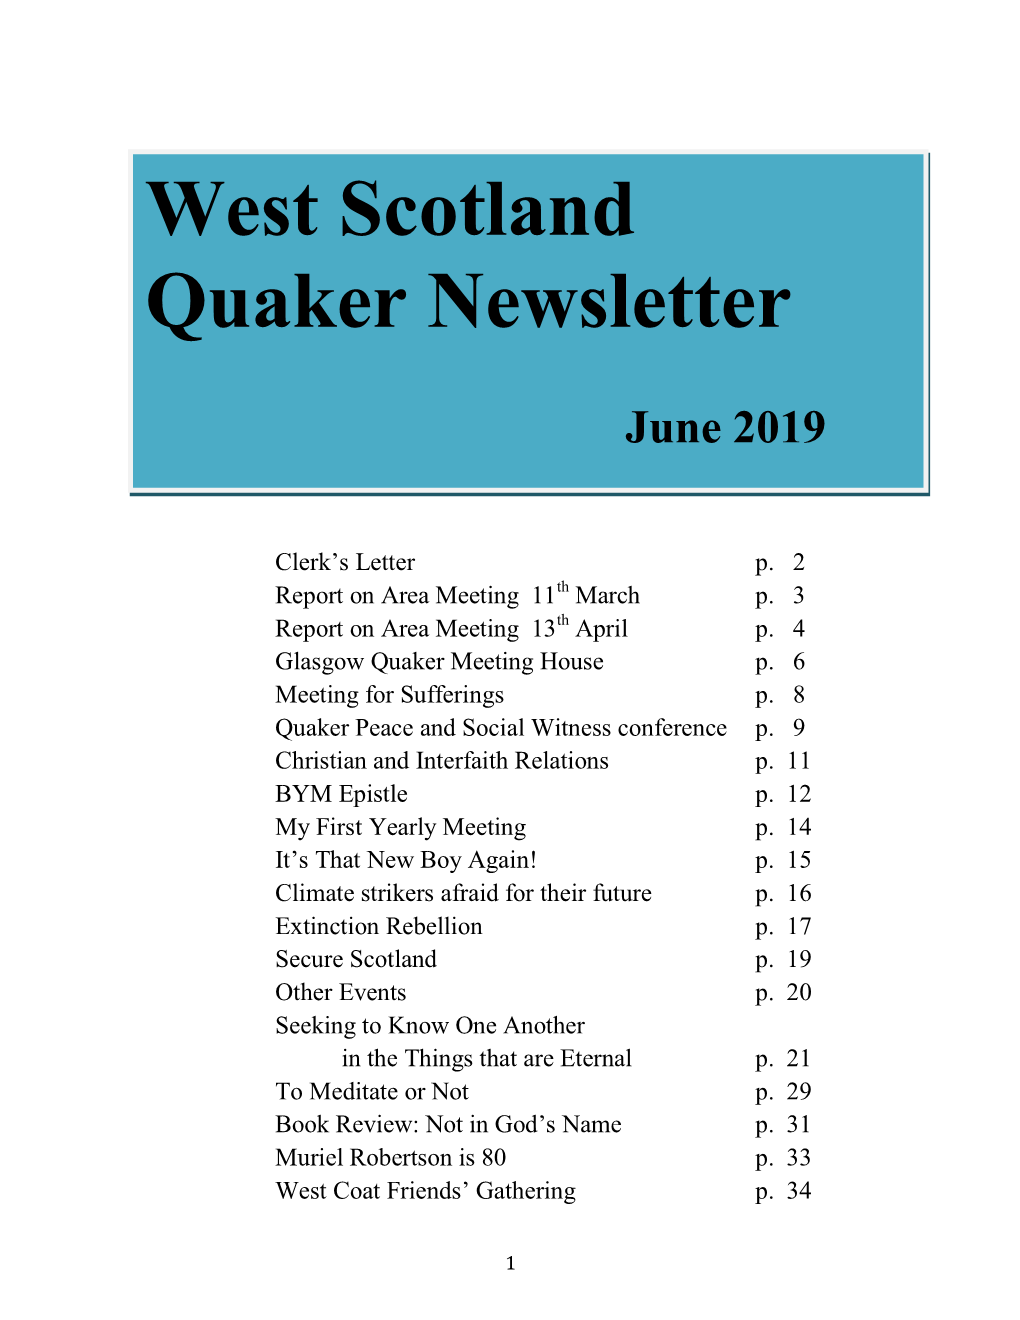 West Scotland Quaker Newsletter